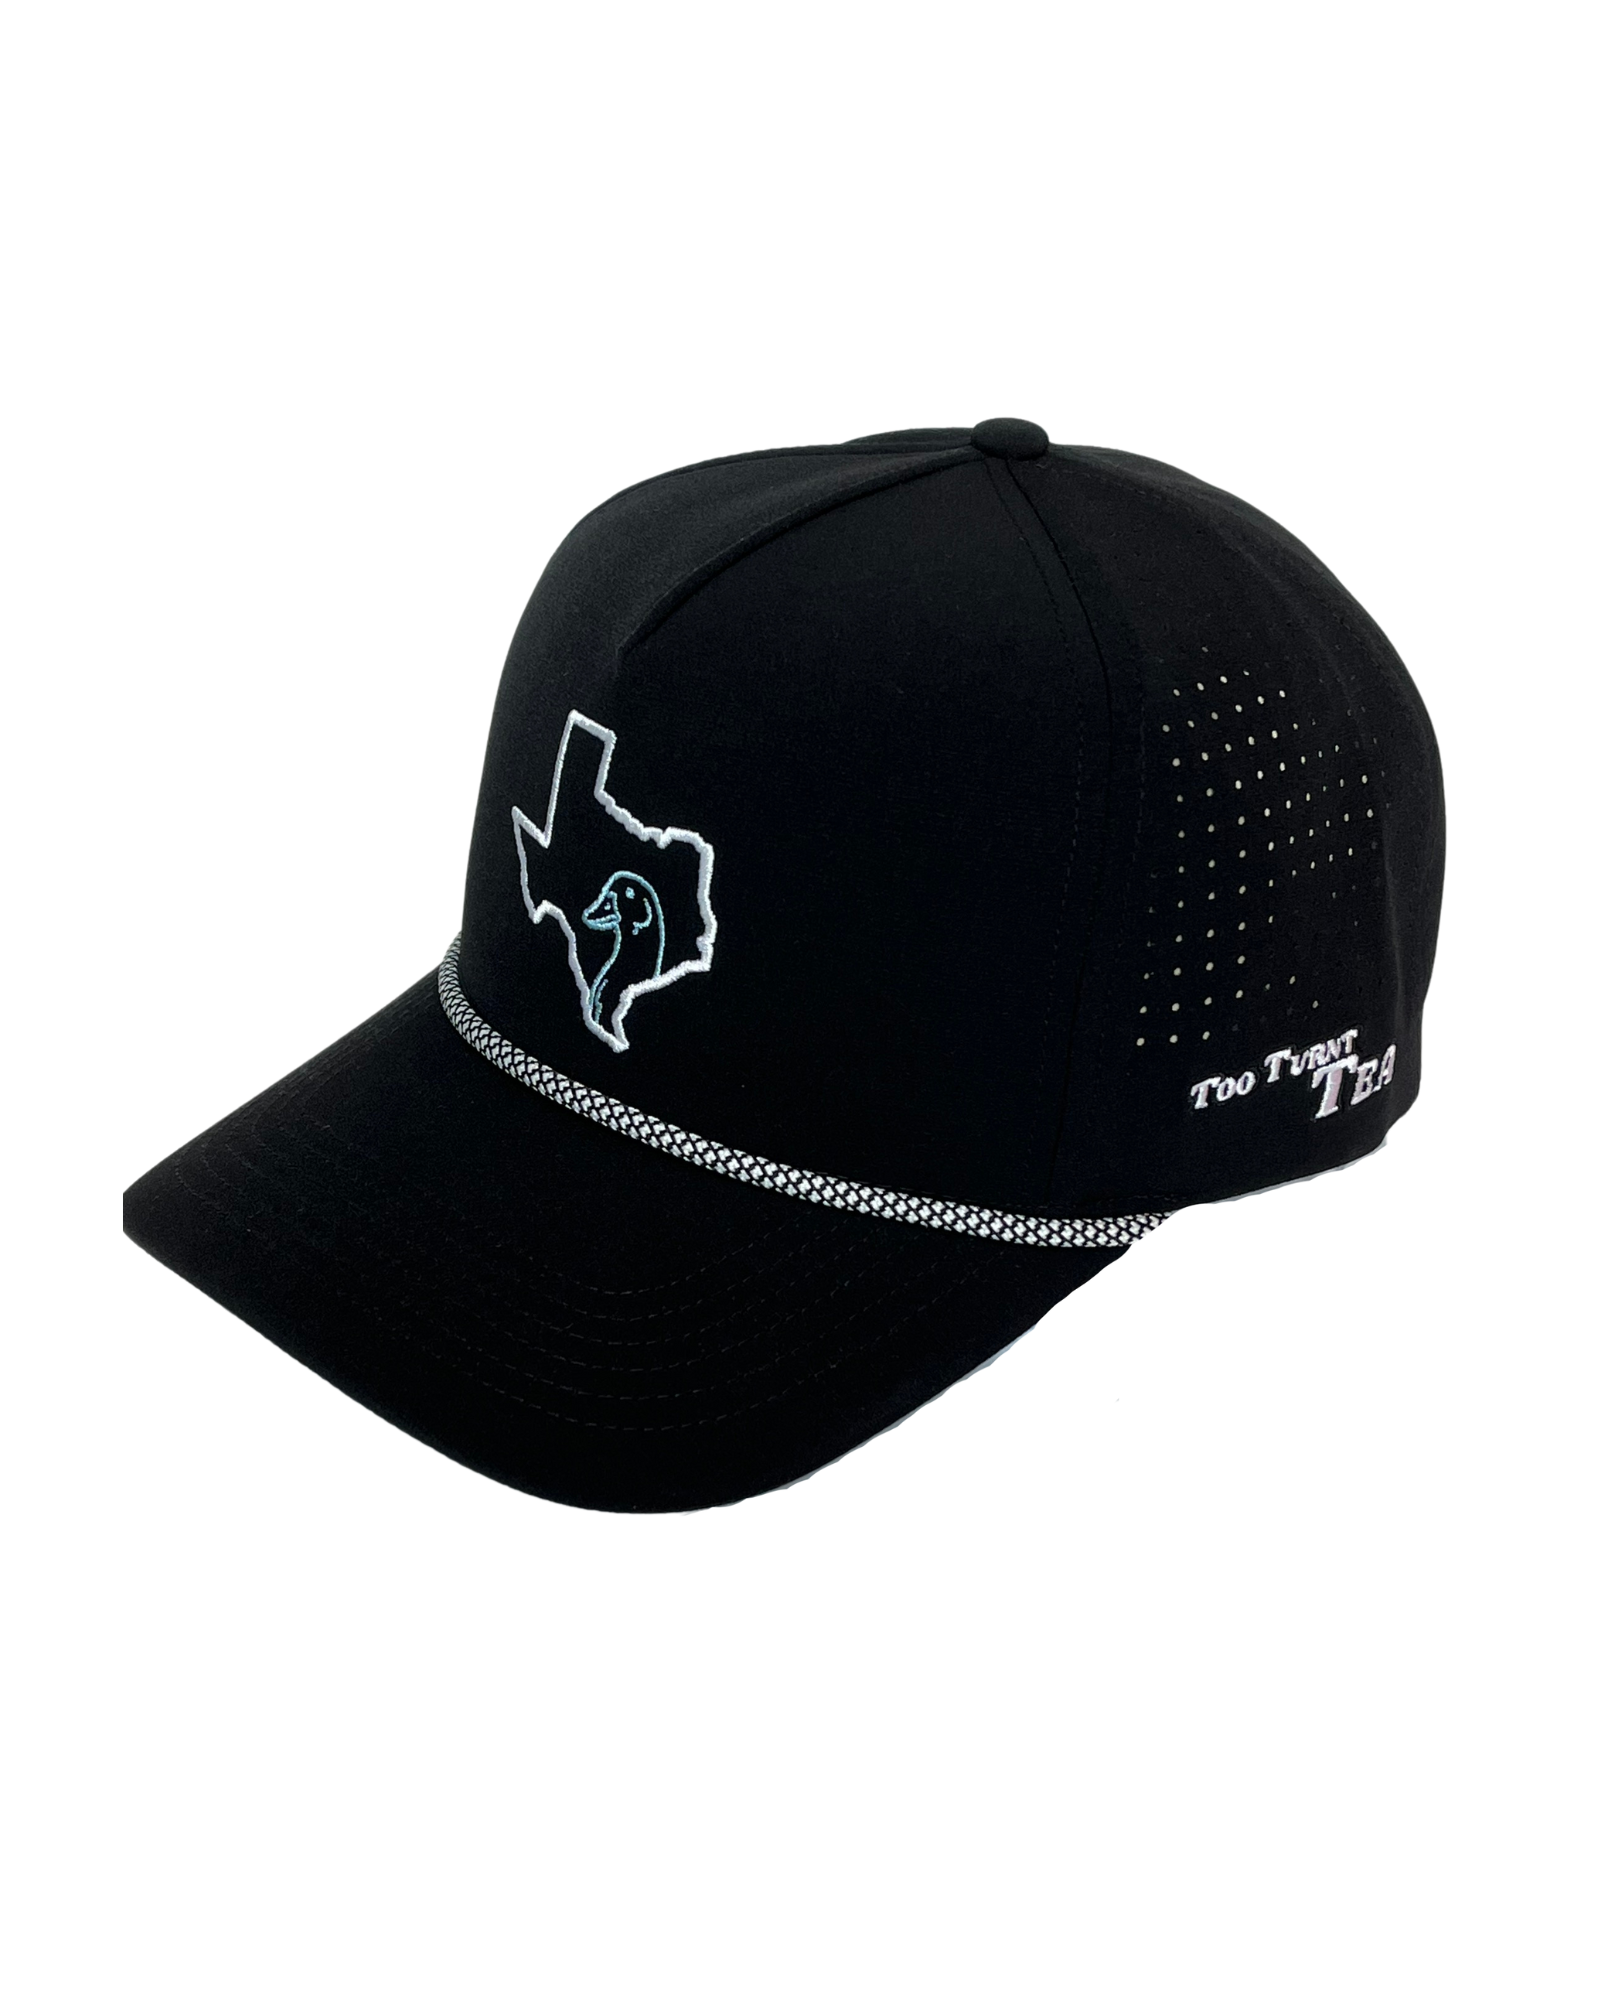 Texas Hat